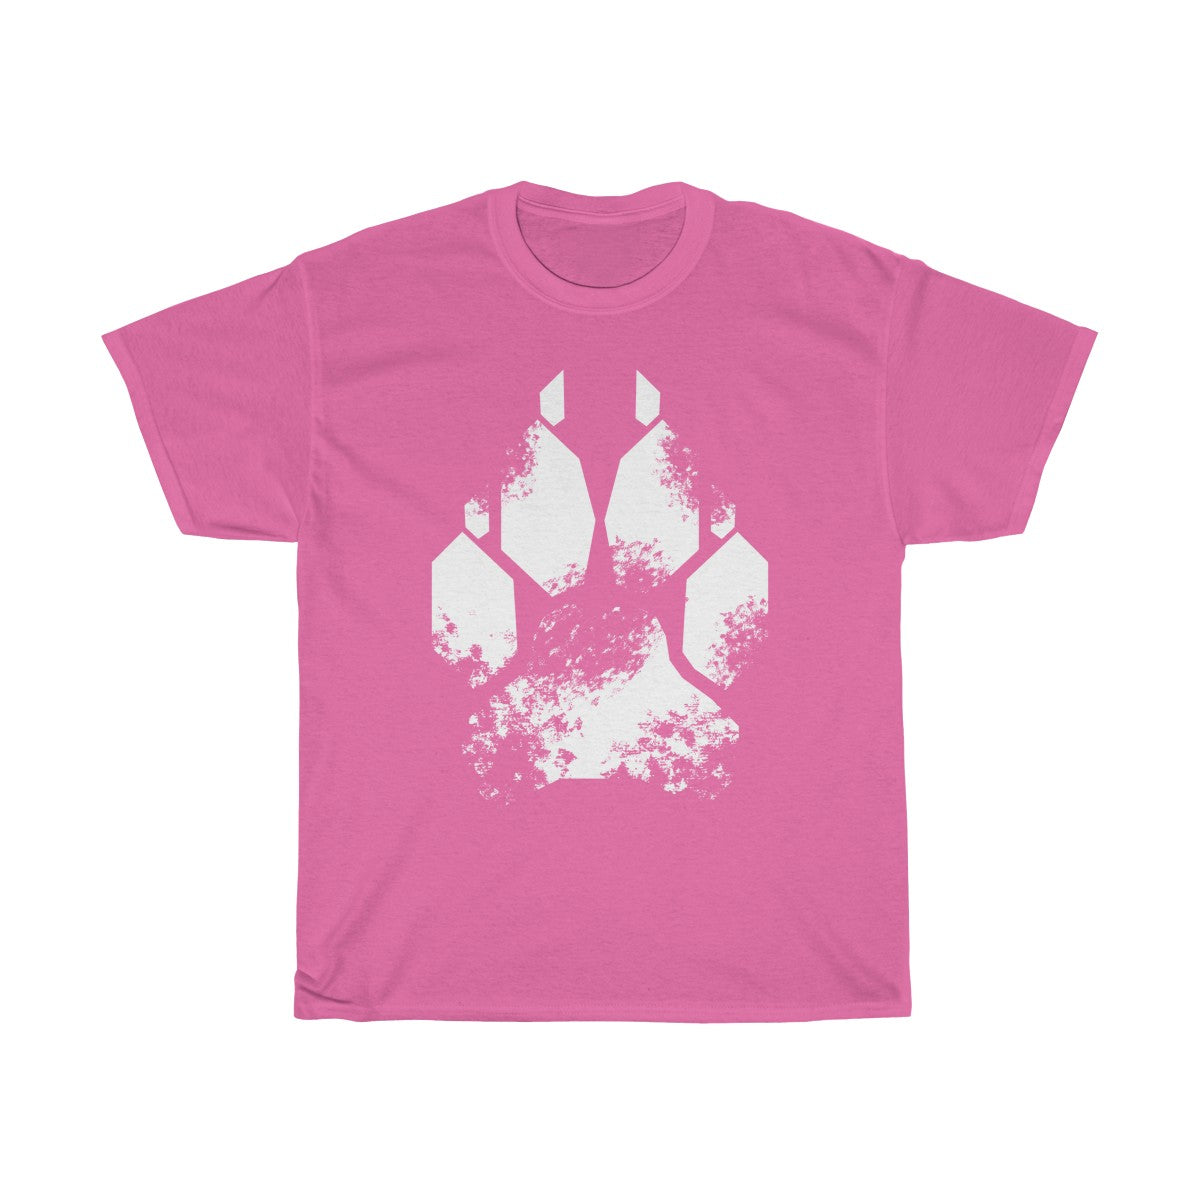 Splash White Canine - T-Shirt T-Shirt Wexon Pink S 